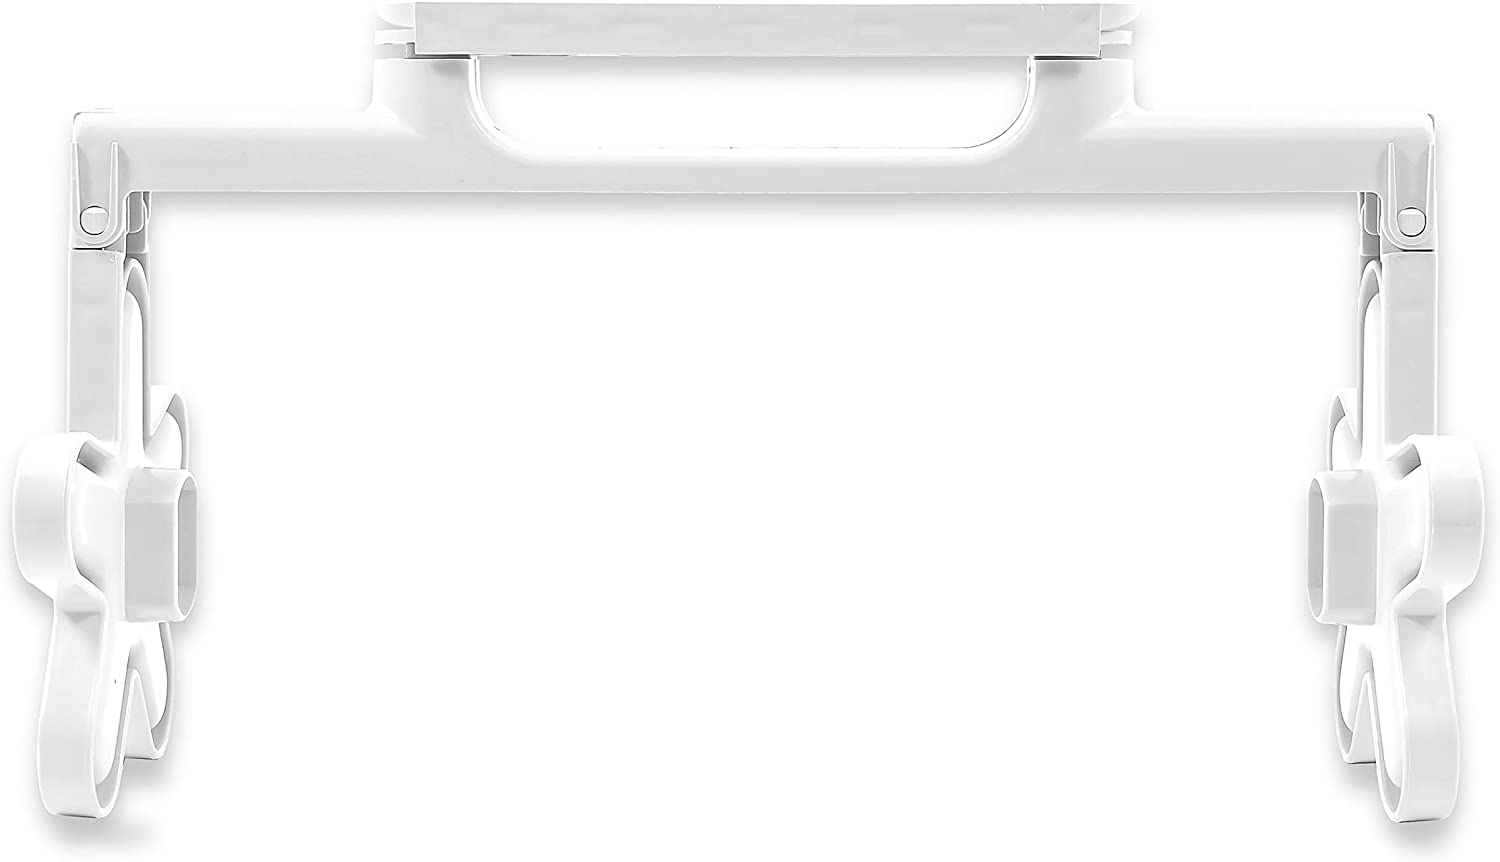 Camco - 57001 - Pop-A-Plate White